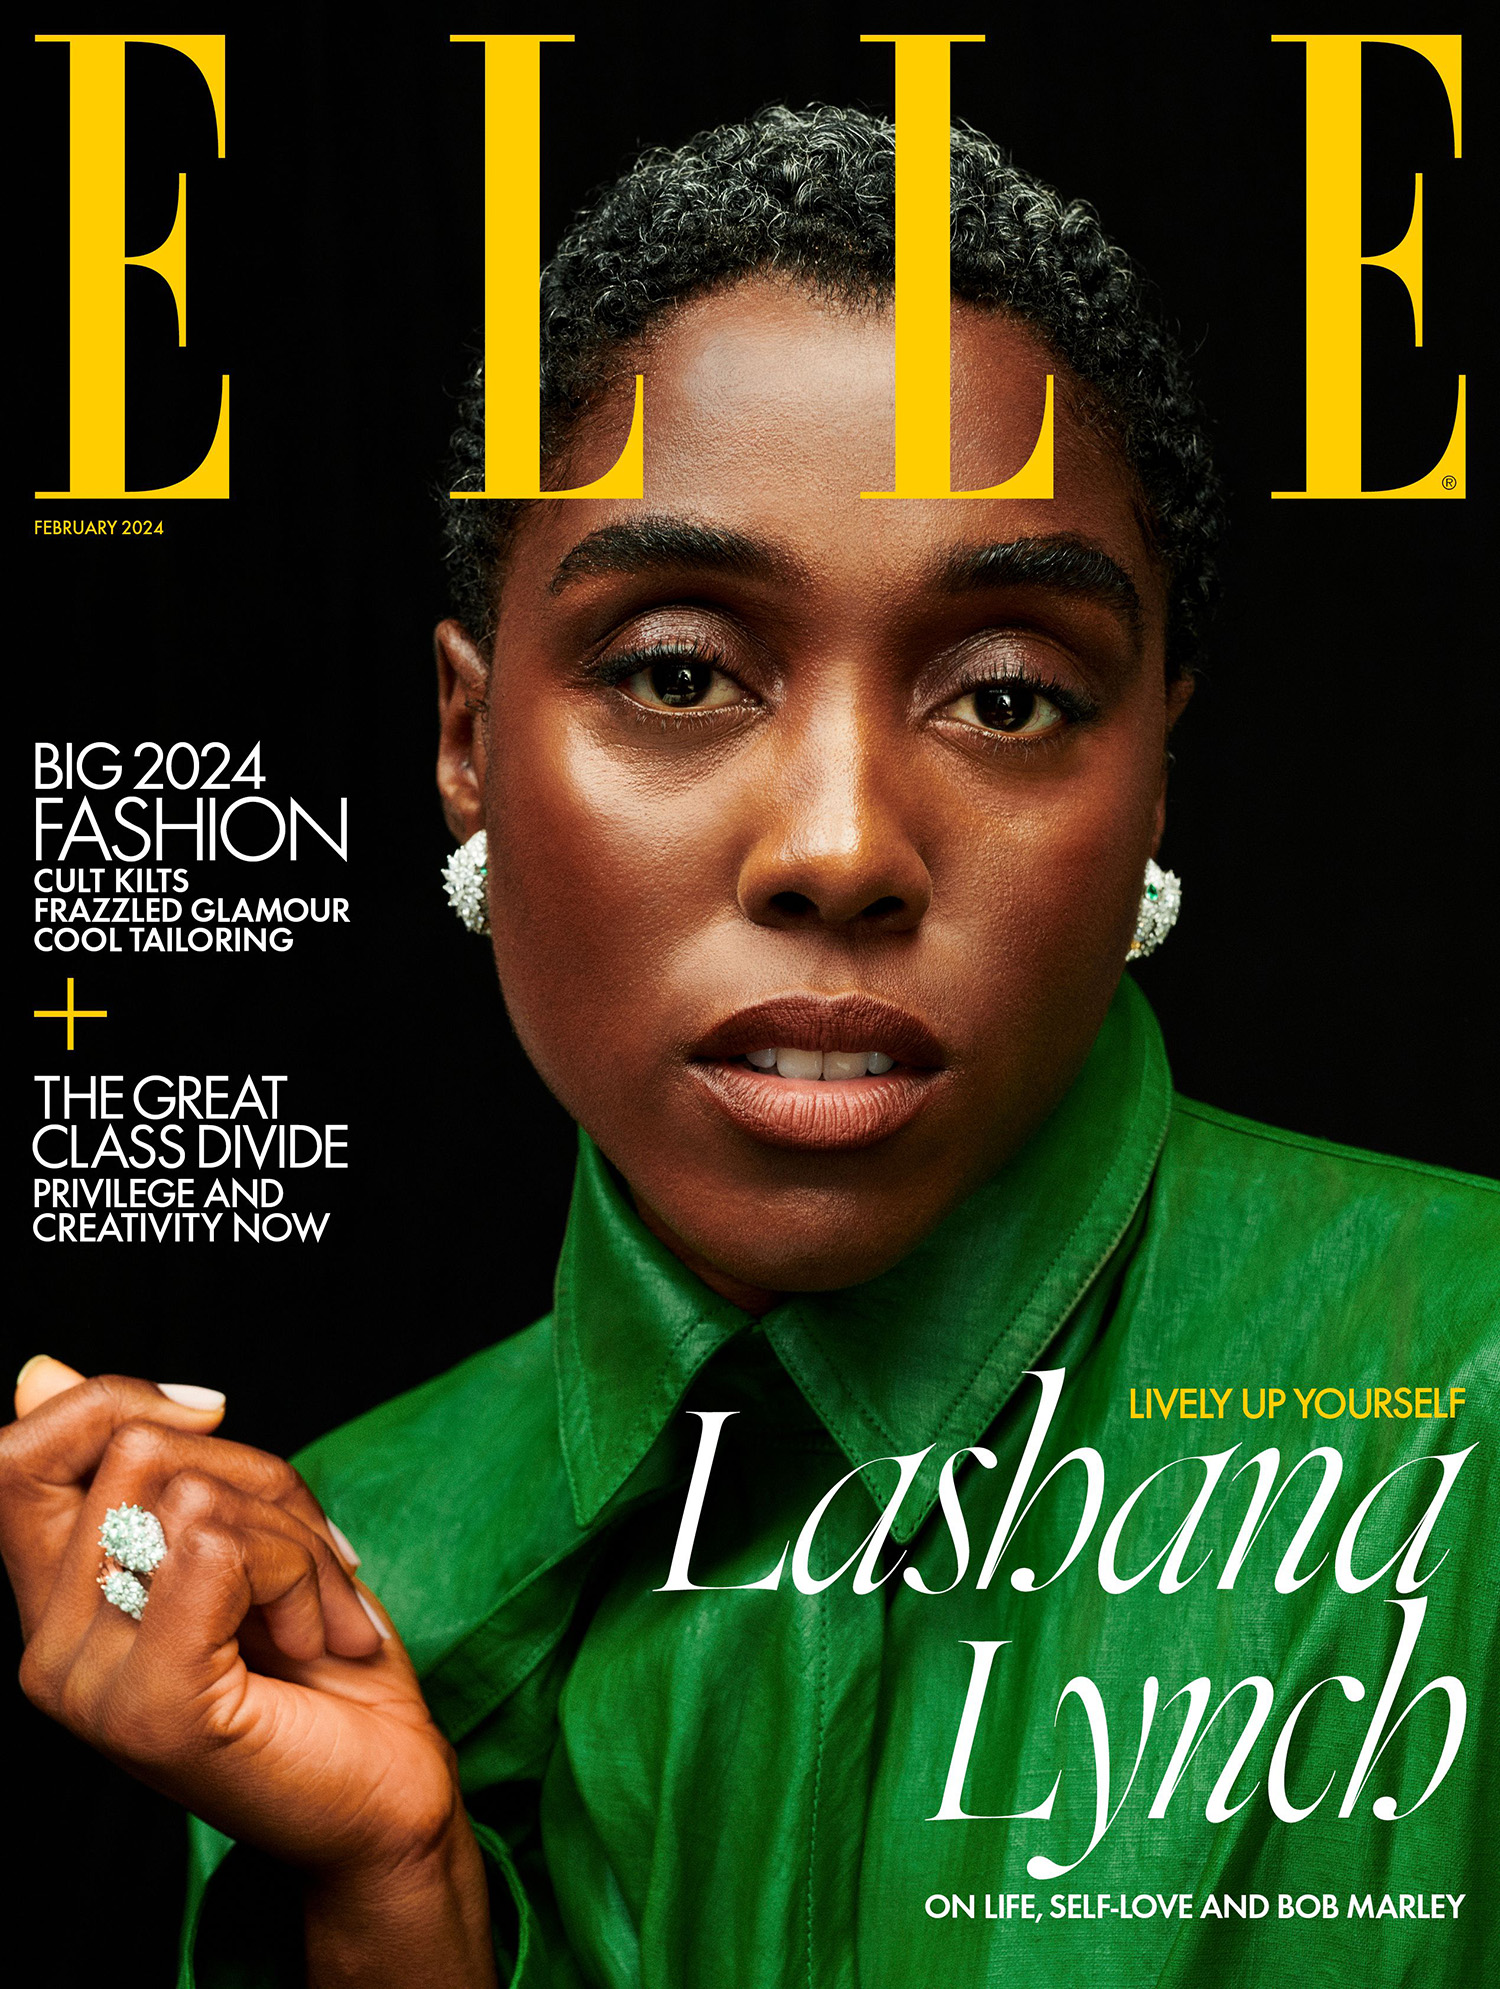 Lashana Lynch covers Elle UK February 2024 by Ekua King